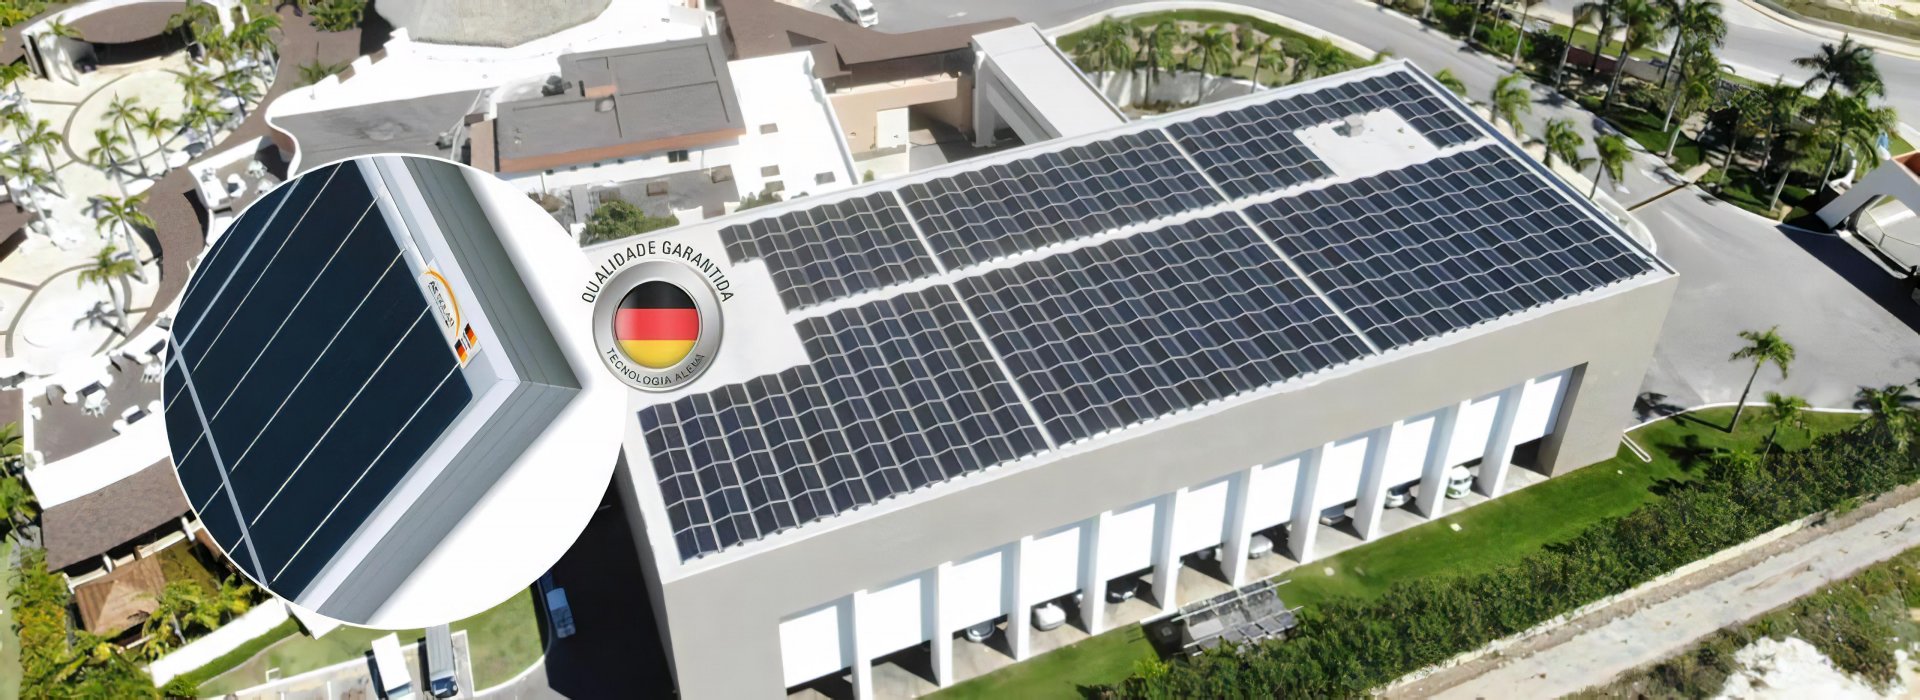 roof solar plant 